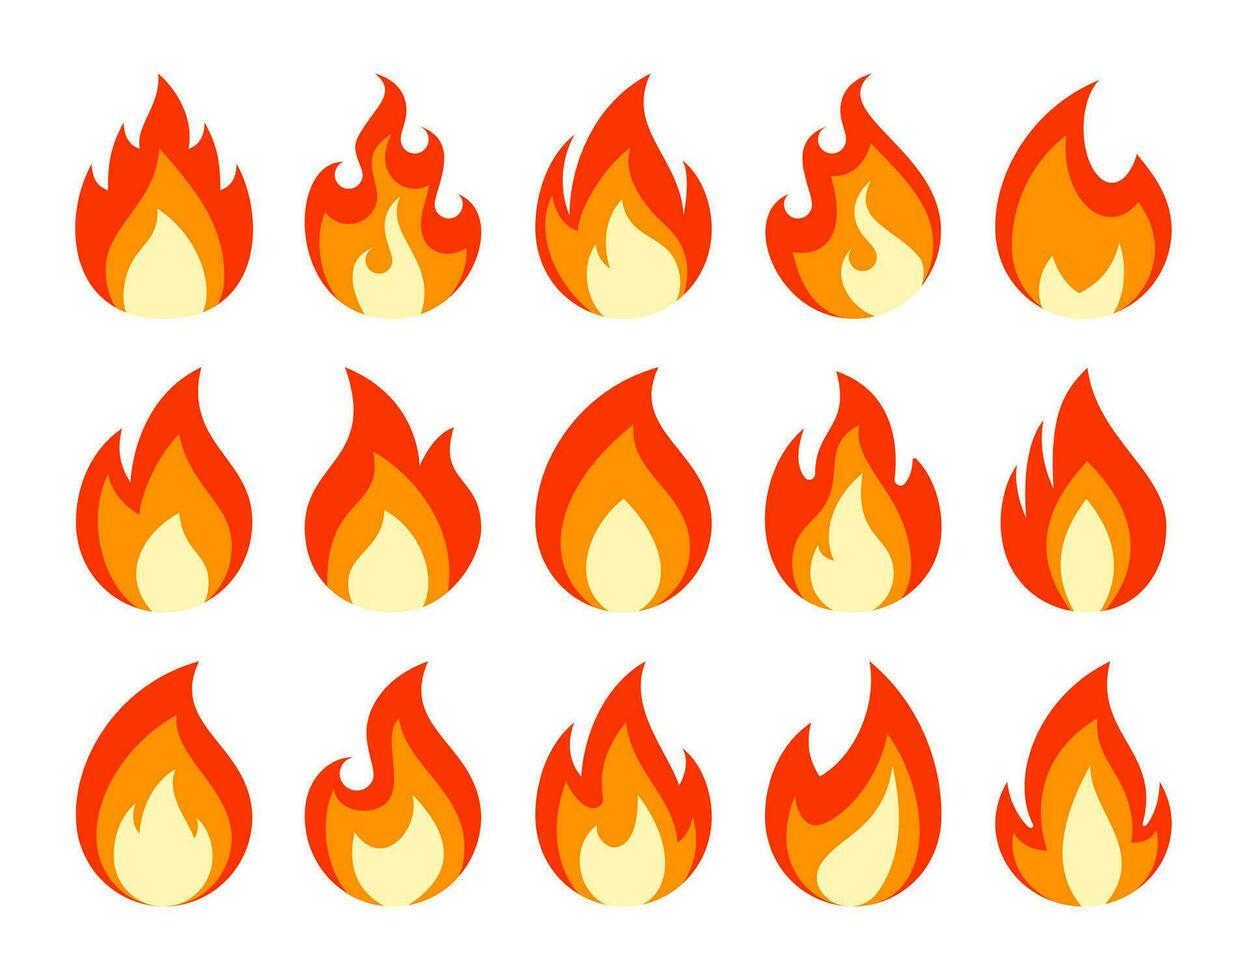 brand emoji. kampvuur brandend vlam, tekenfilm heet rood vreugdevuur, vuurbol abstract koel geweldig symbool. geïsoleerd wildvuur vector pictogrammen reeks